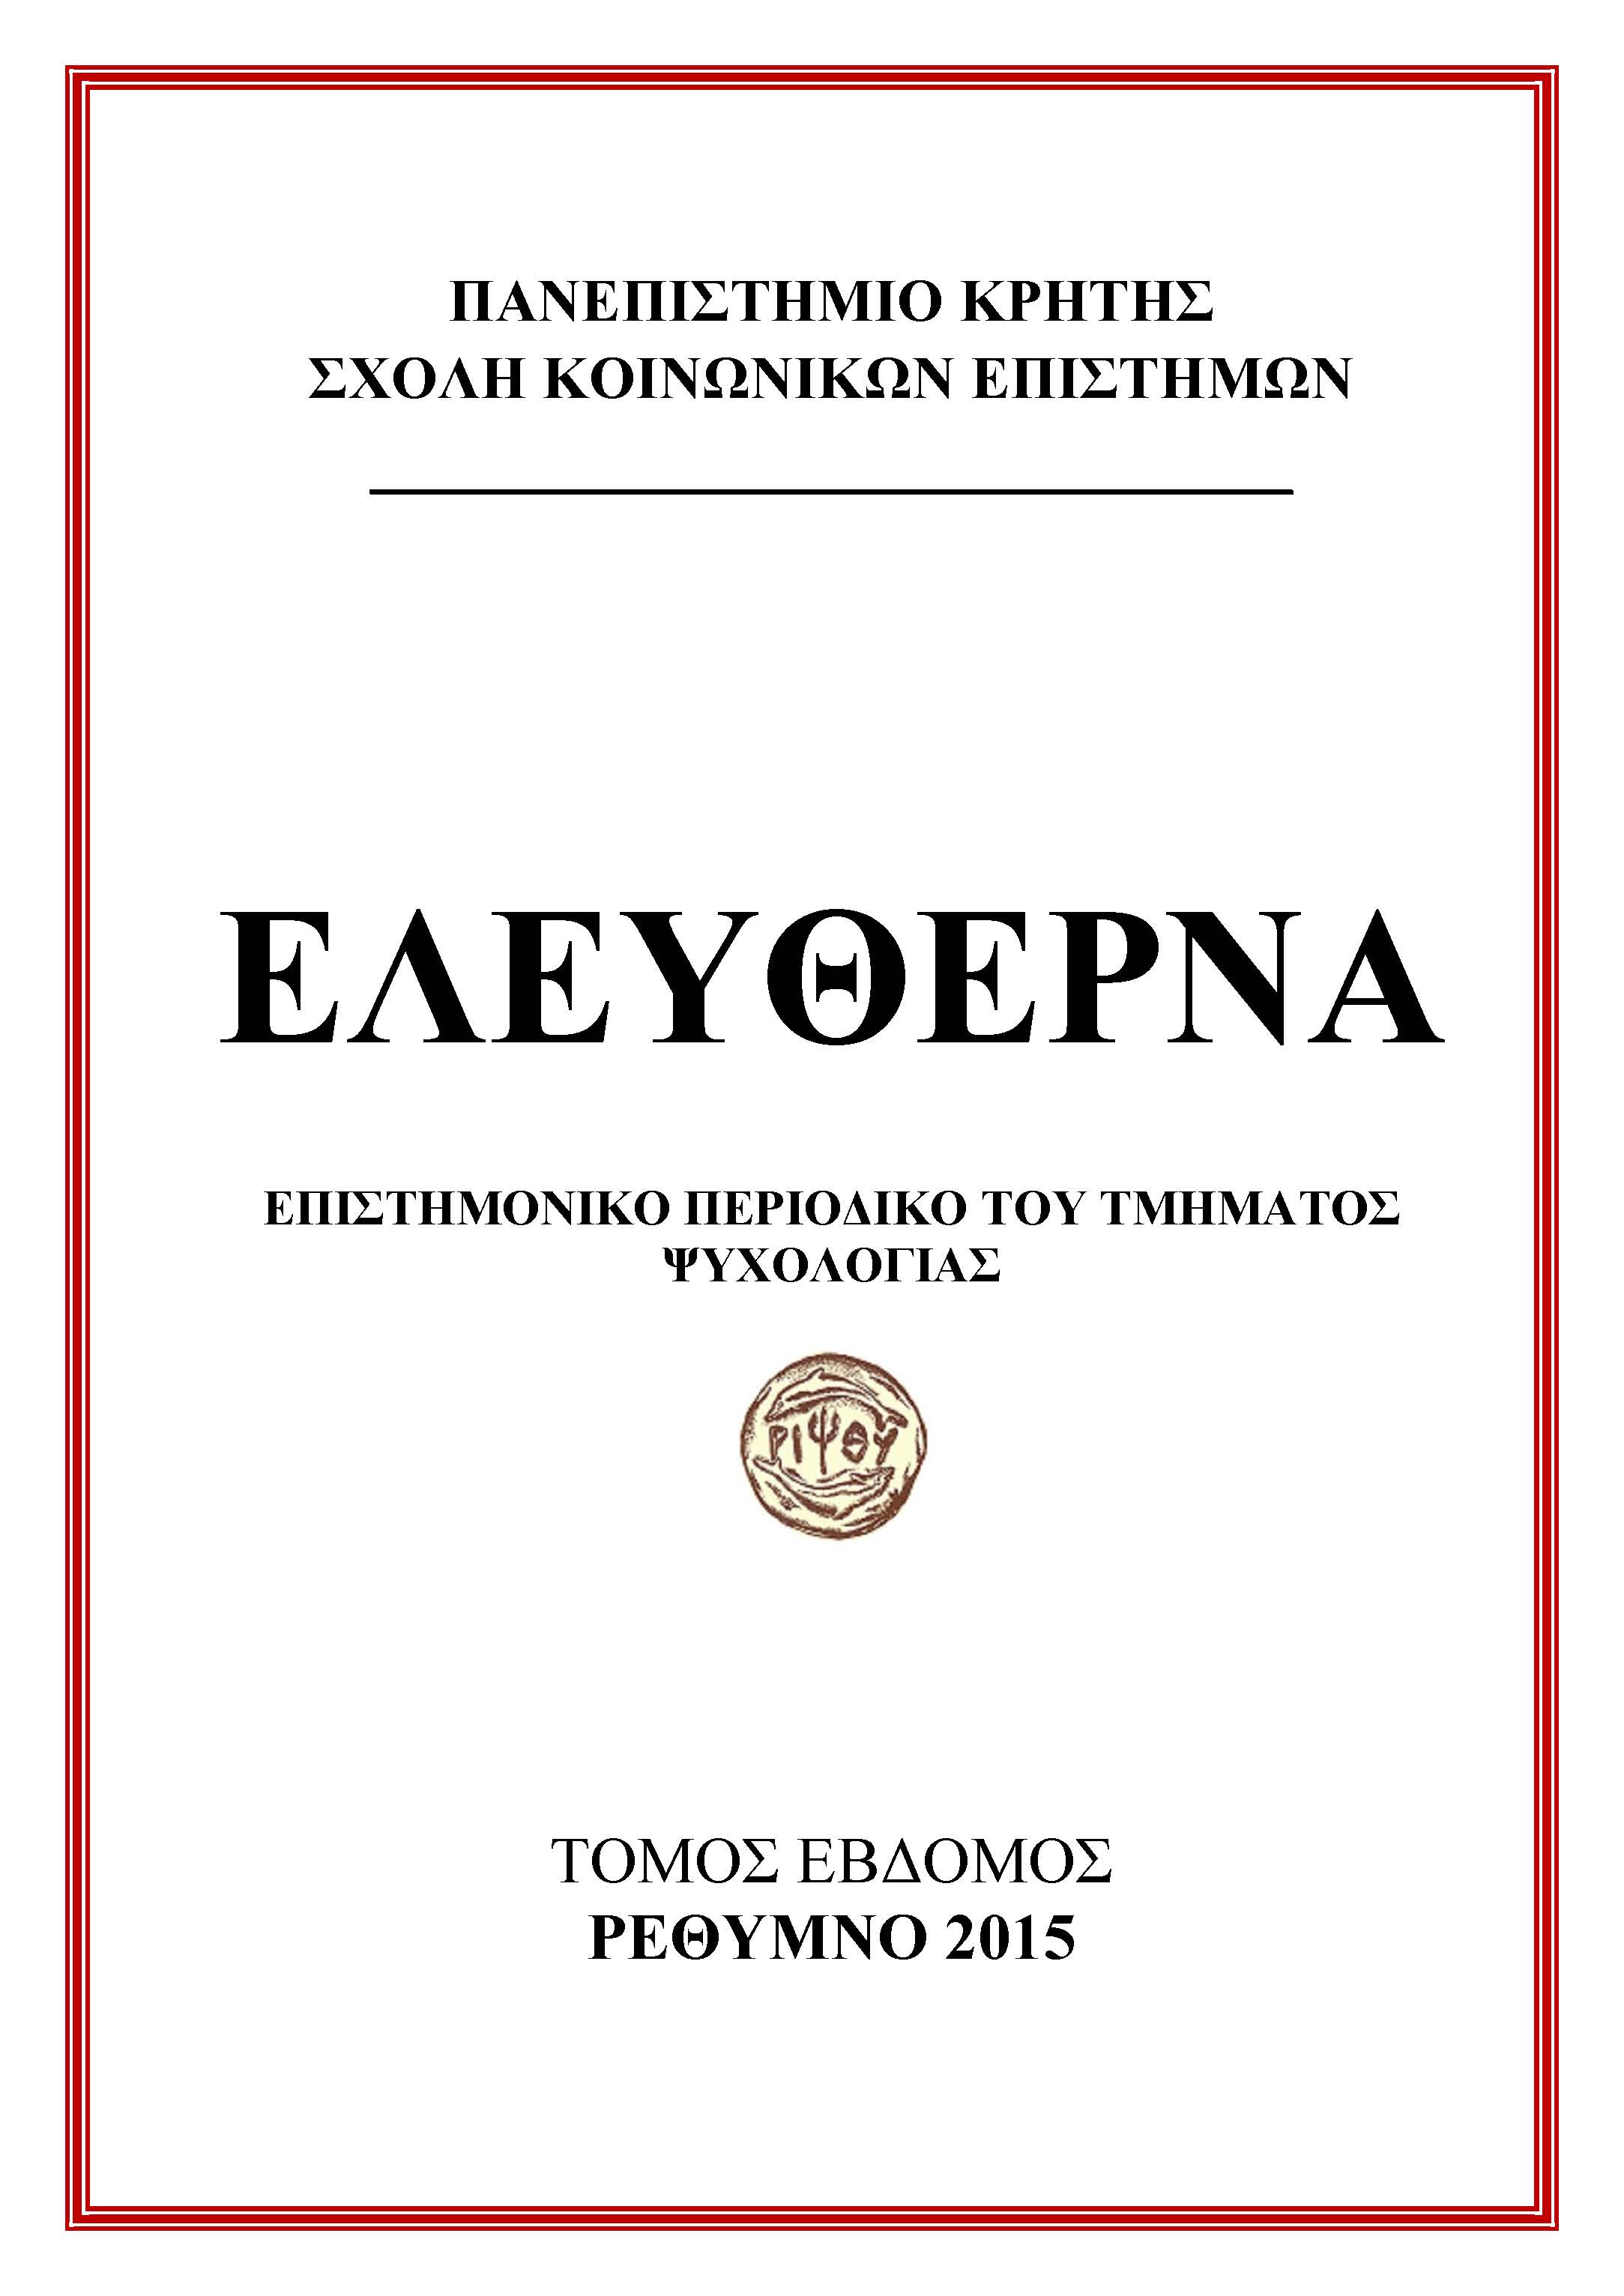 ELEYTHERNA ΤΟΜΟΣ ΕΒΔΟΜΟΣ / VOLUME VΙΙ